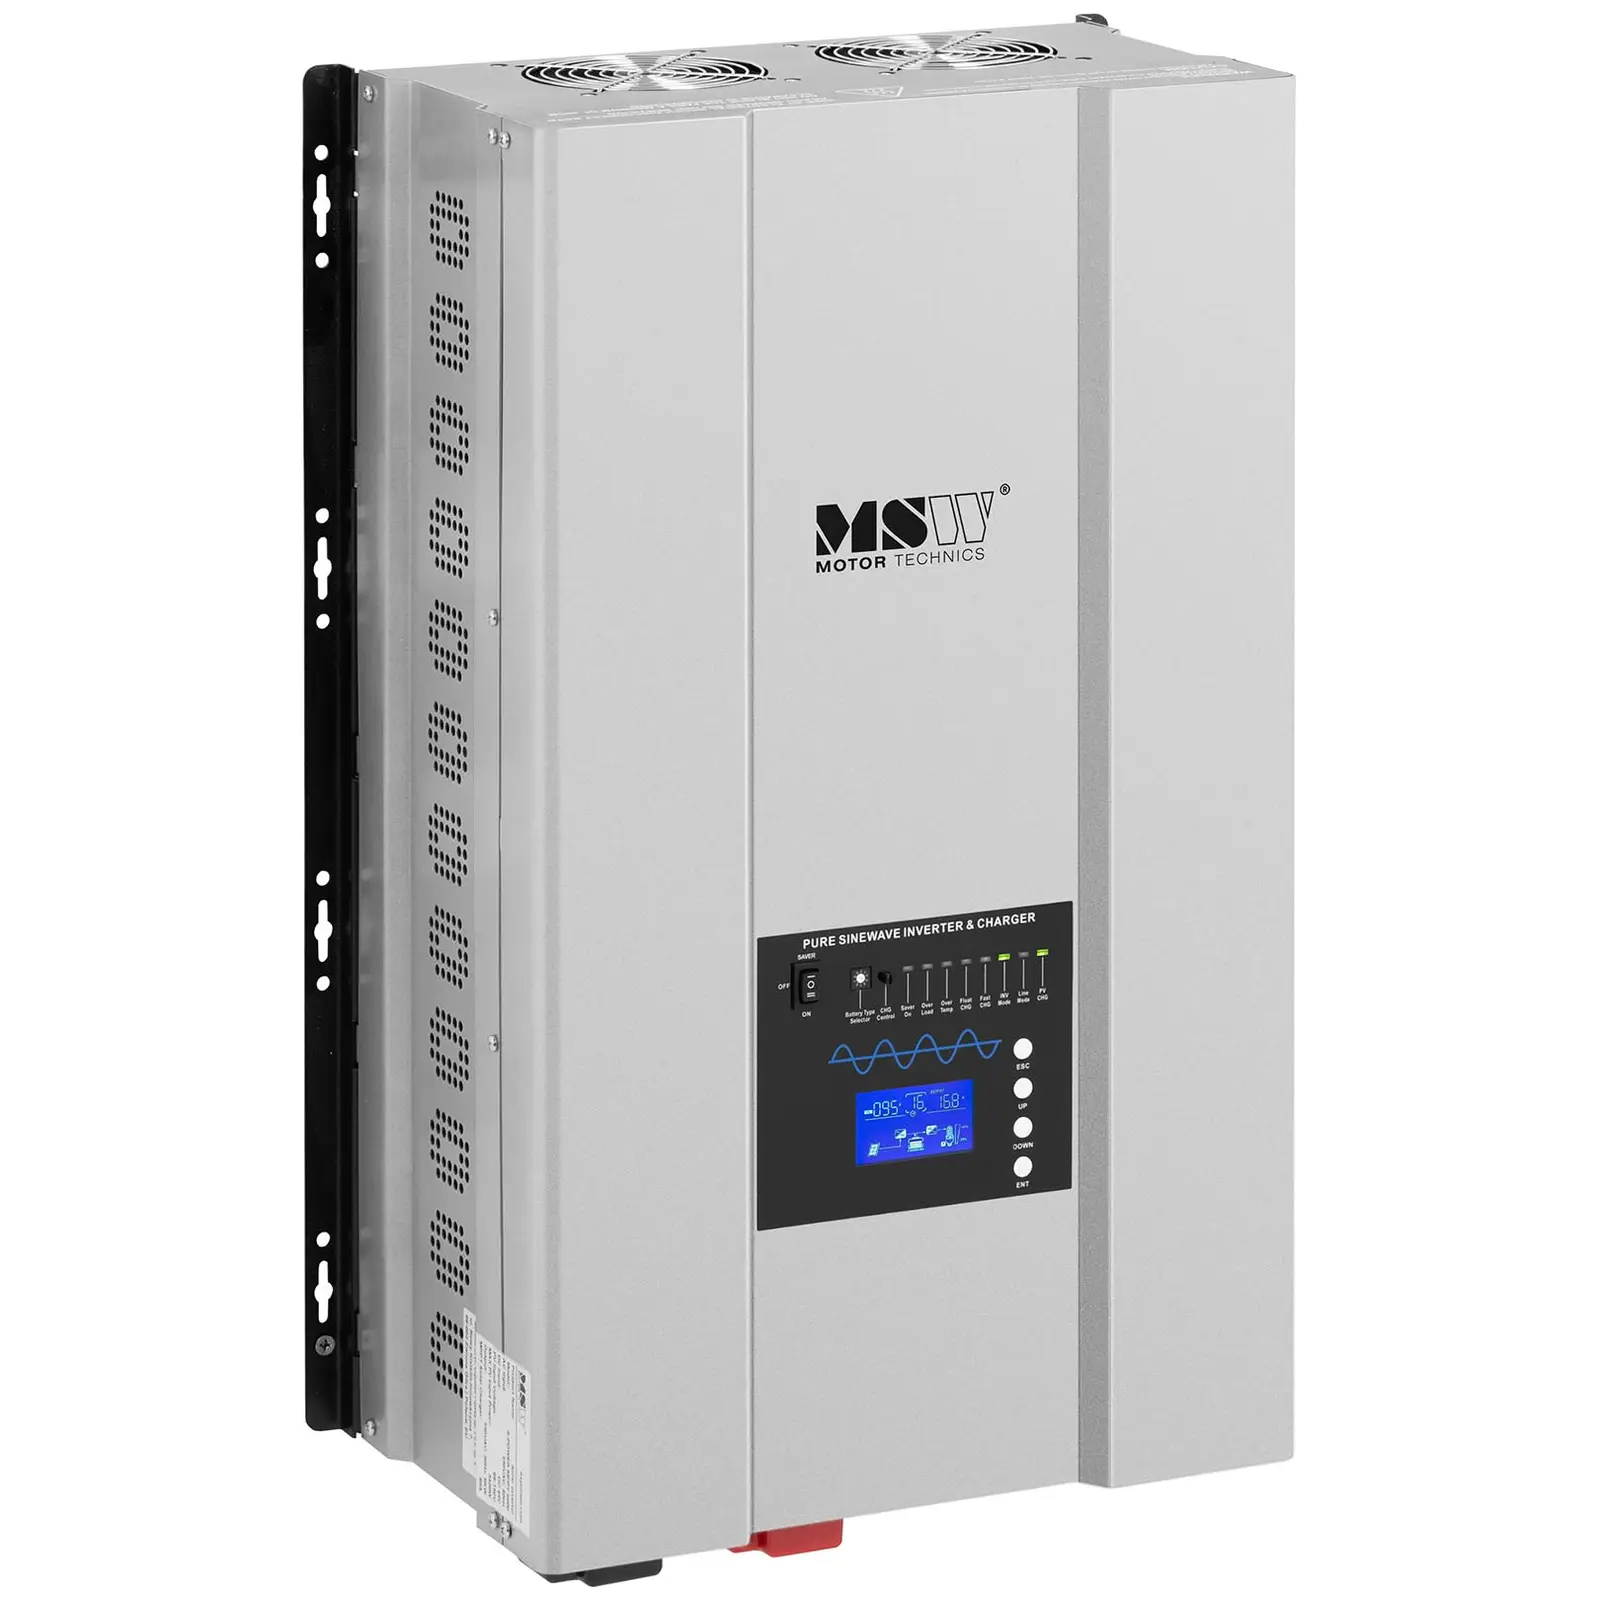 Inverter - MPPT - izven omrežja - 8 kW - 88 % učinkovitost